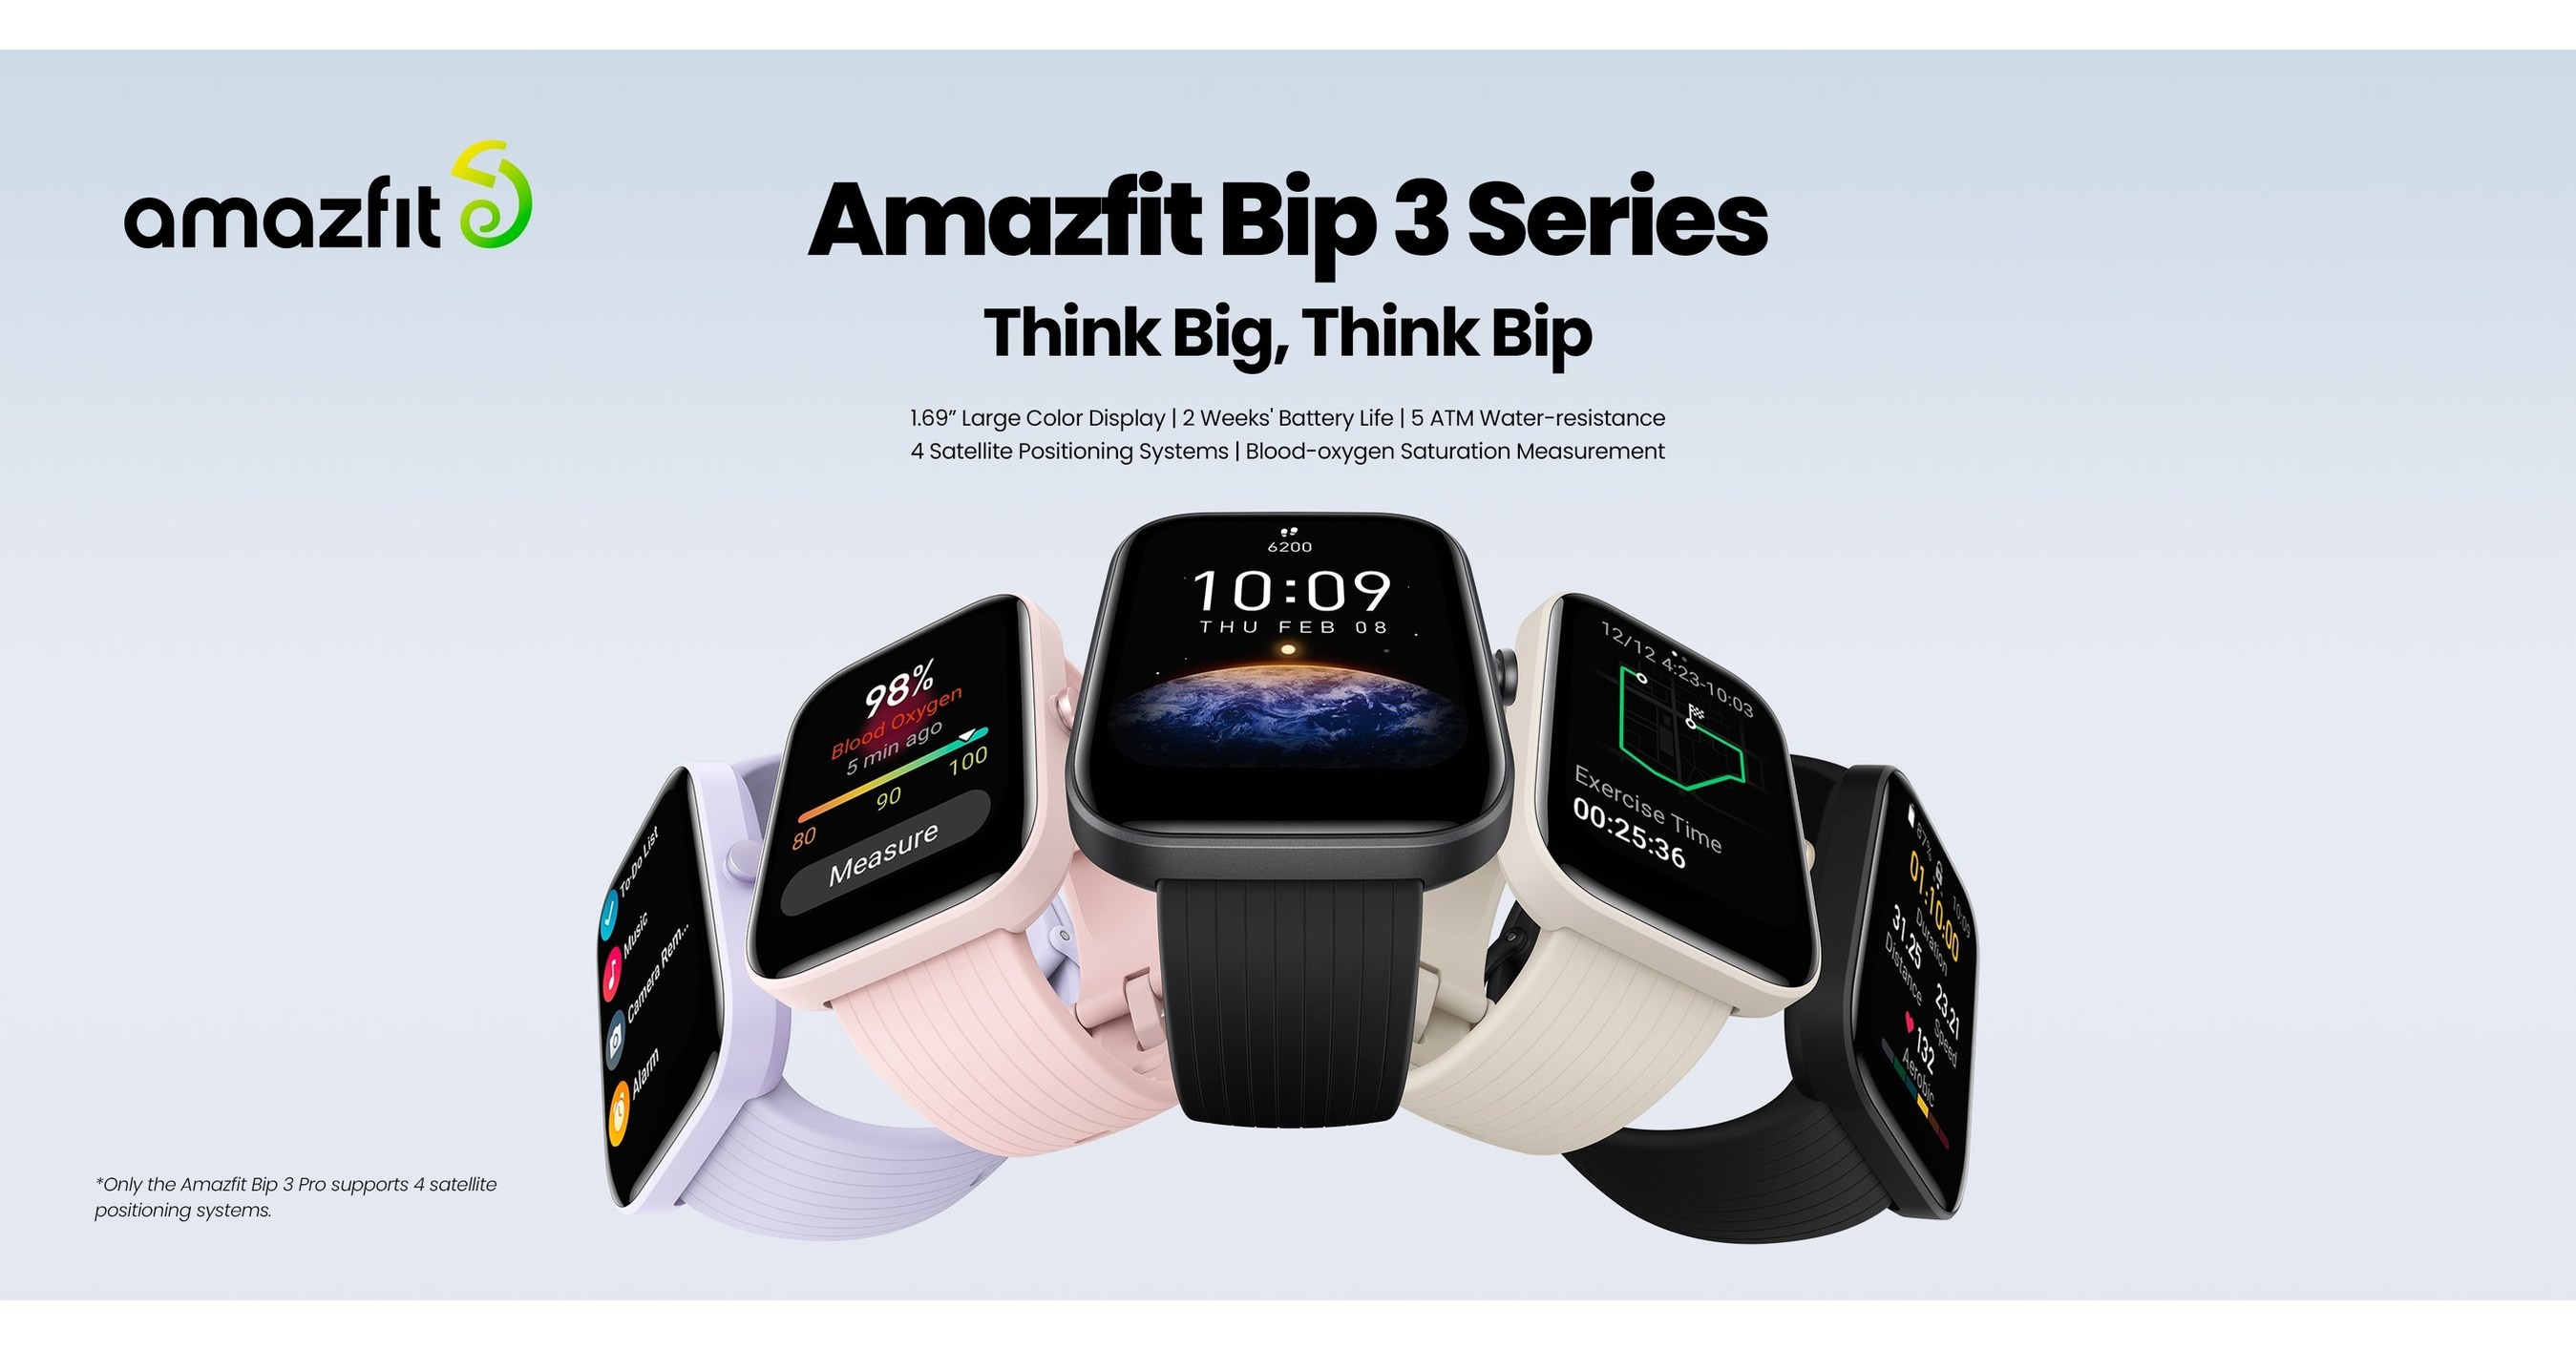 Amazfit Balance Smartwatch : Target